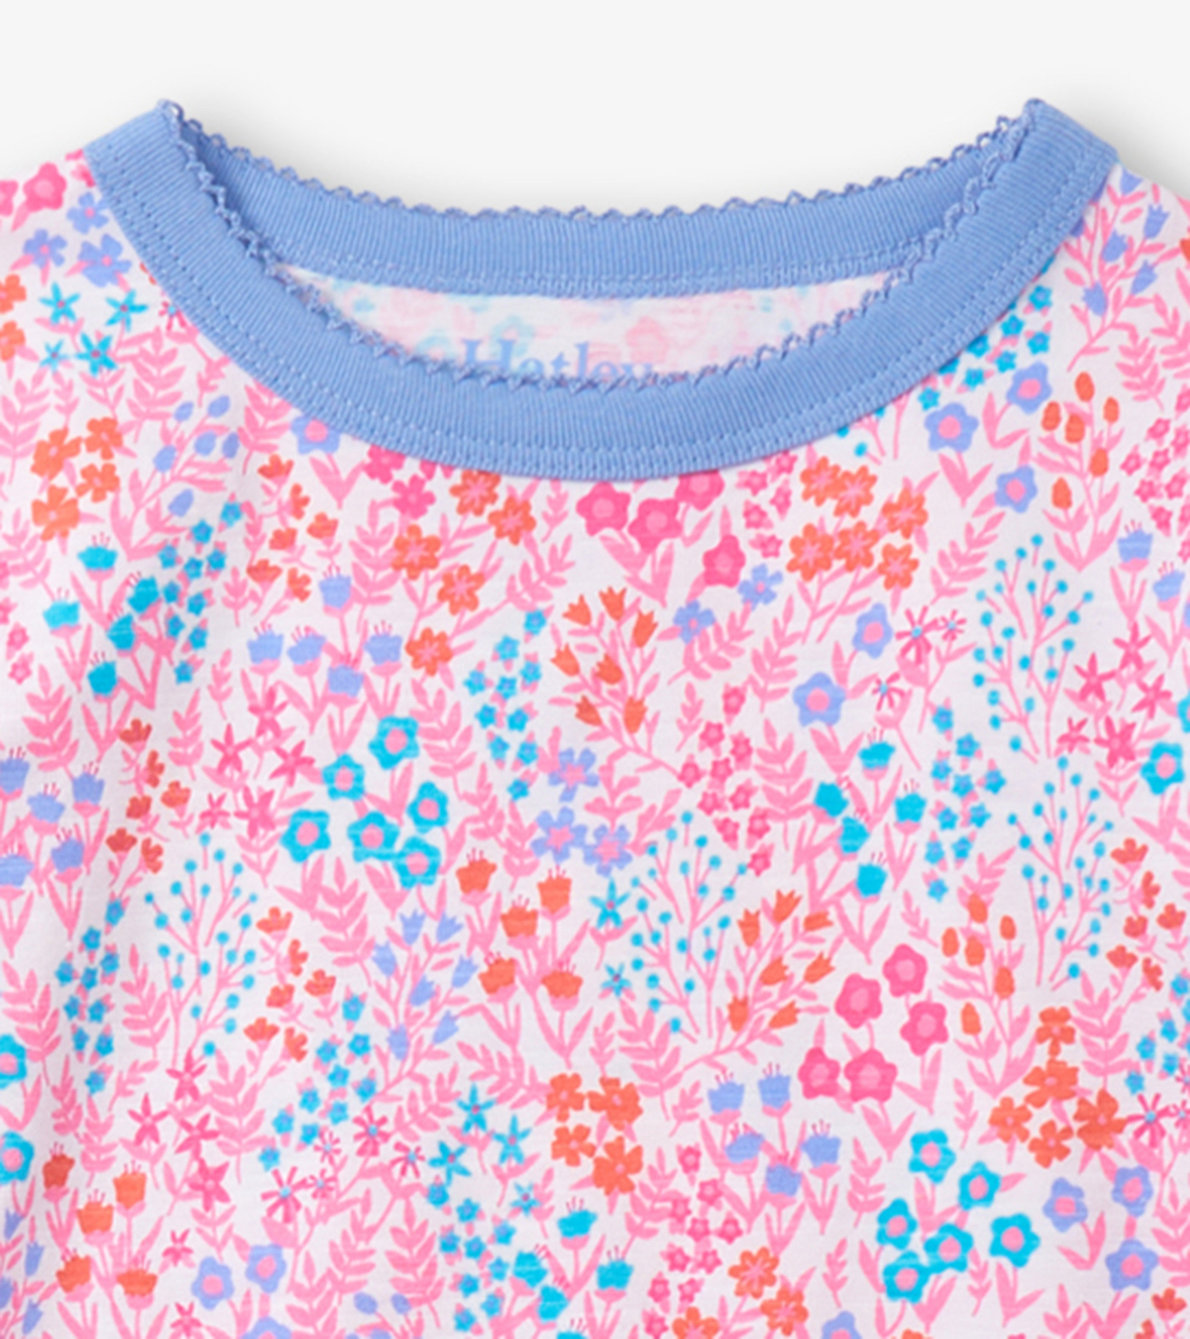 View larger image of Girls Ditsy Floral Pajama Set